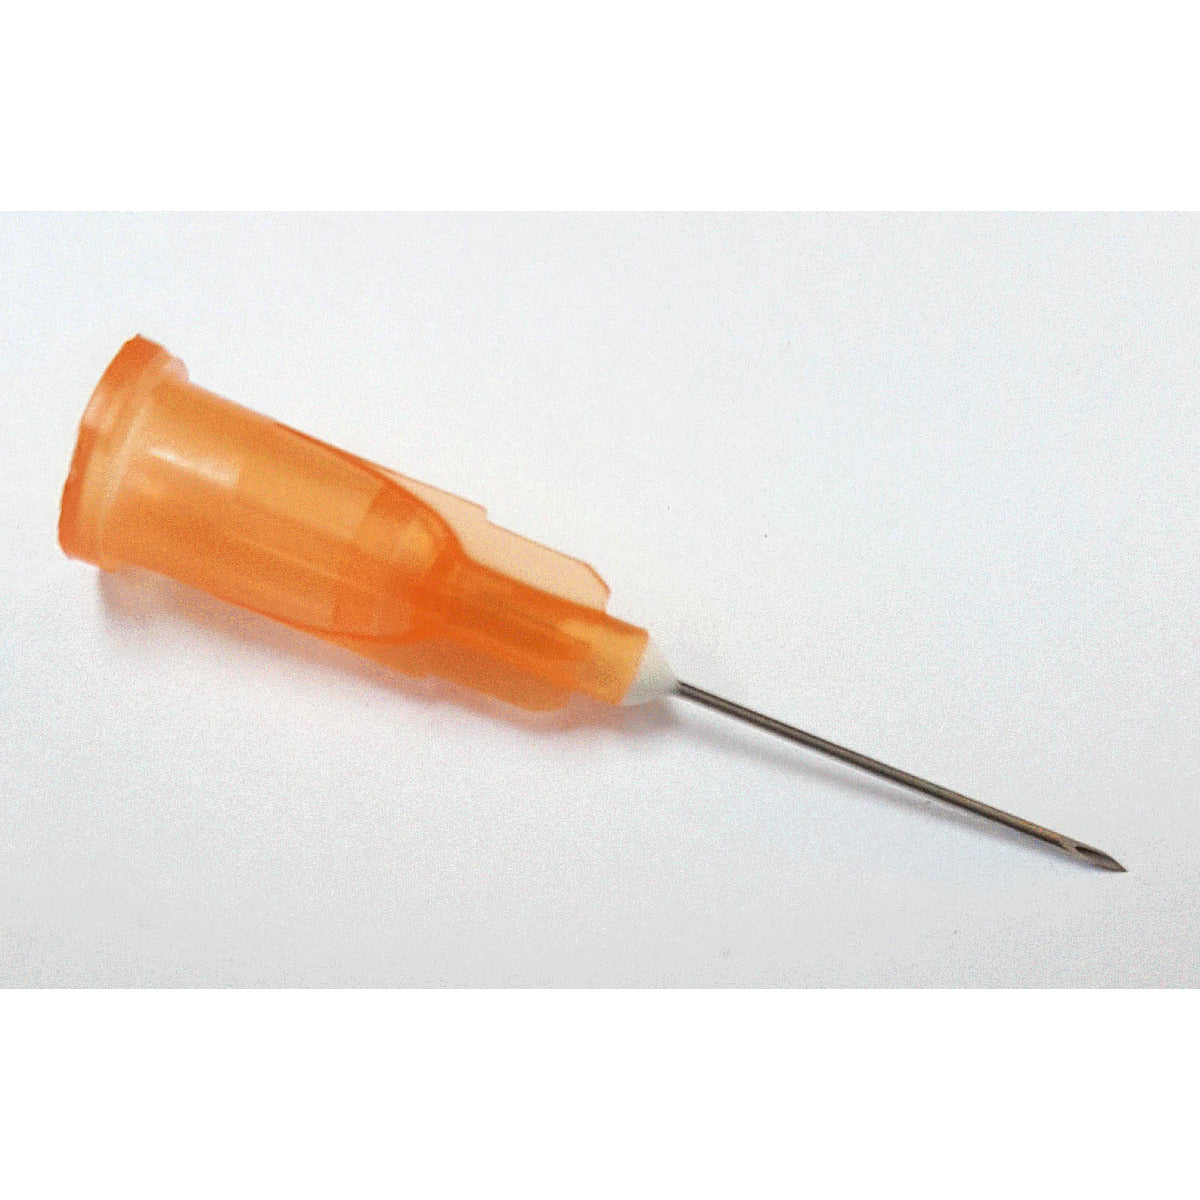 Terumo 3 Part Syringe & Needle 3ml with Luer Slip 25g x 5/8" - Box of 100